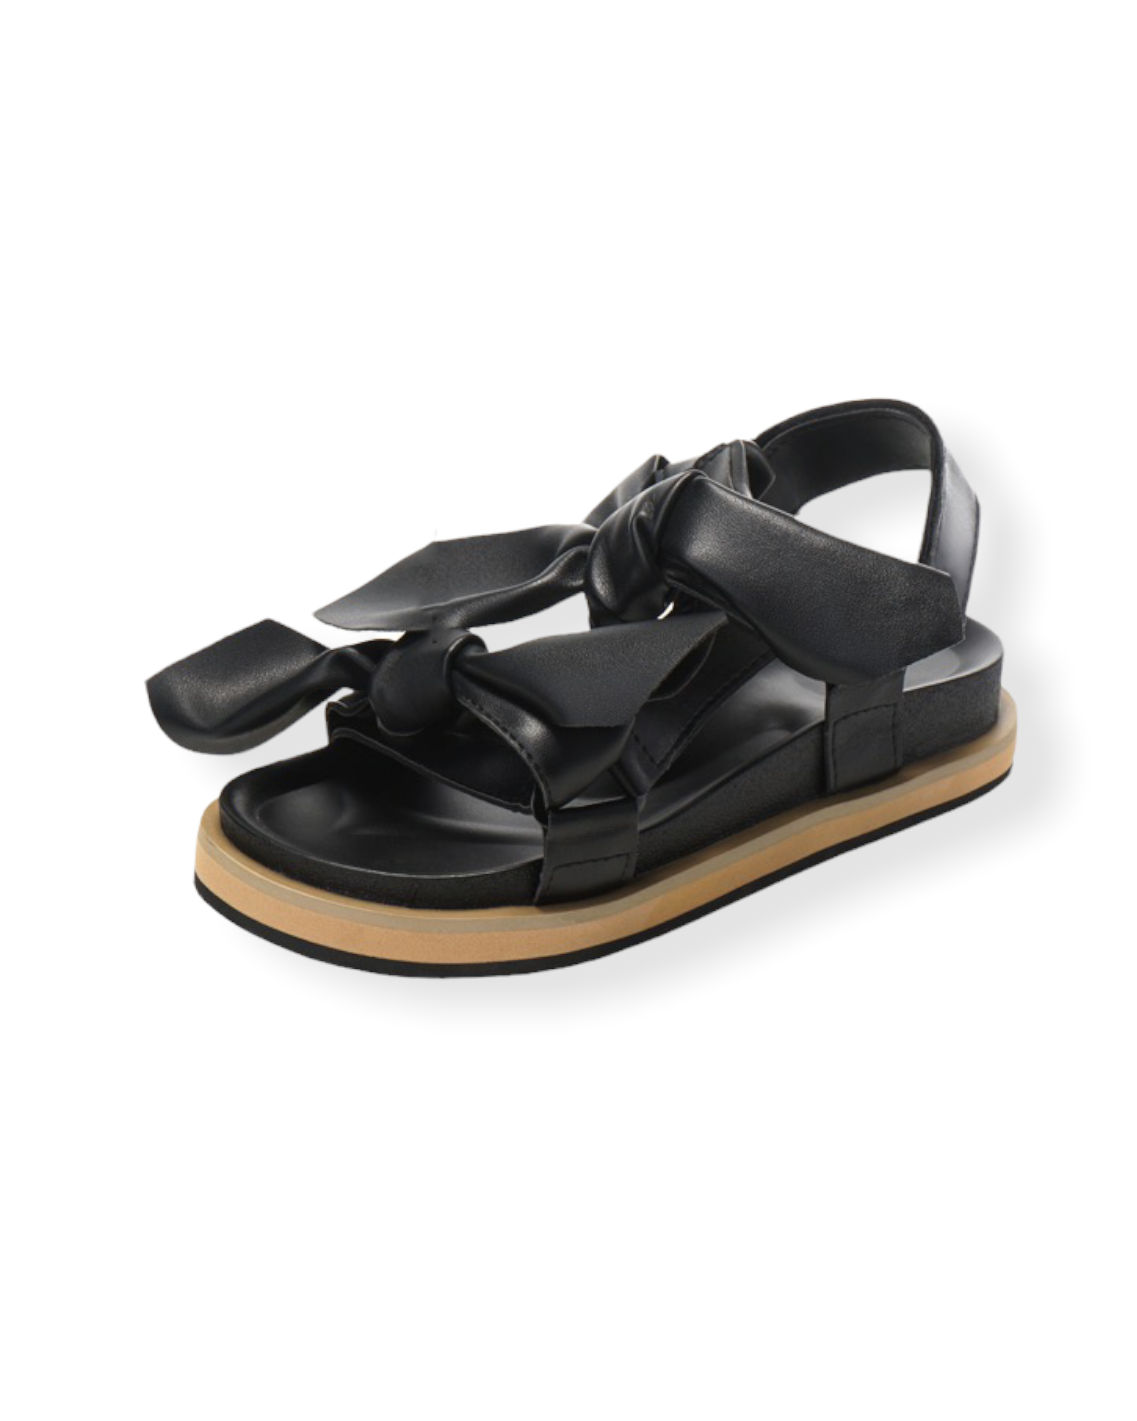 black PU leather bows sandals - 37 / 38